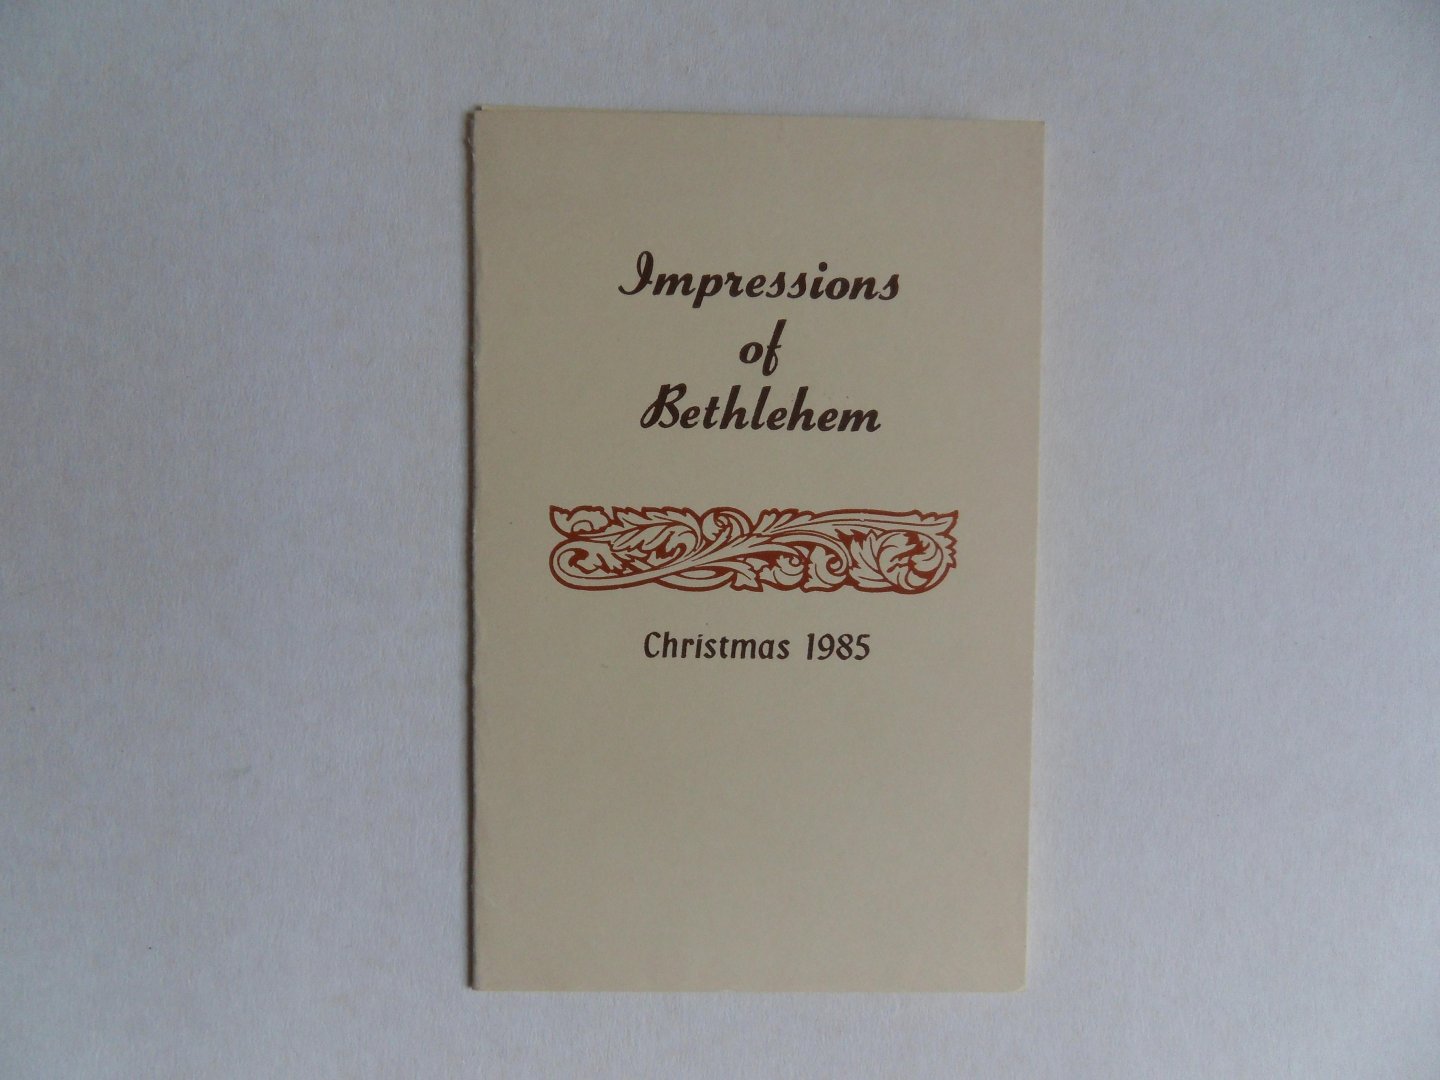 Burford Mason, Aileen. [ Met GESIGNEERDE opdracht ]. - Impressions of Bethlehem. - Christmas 1985.